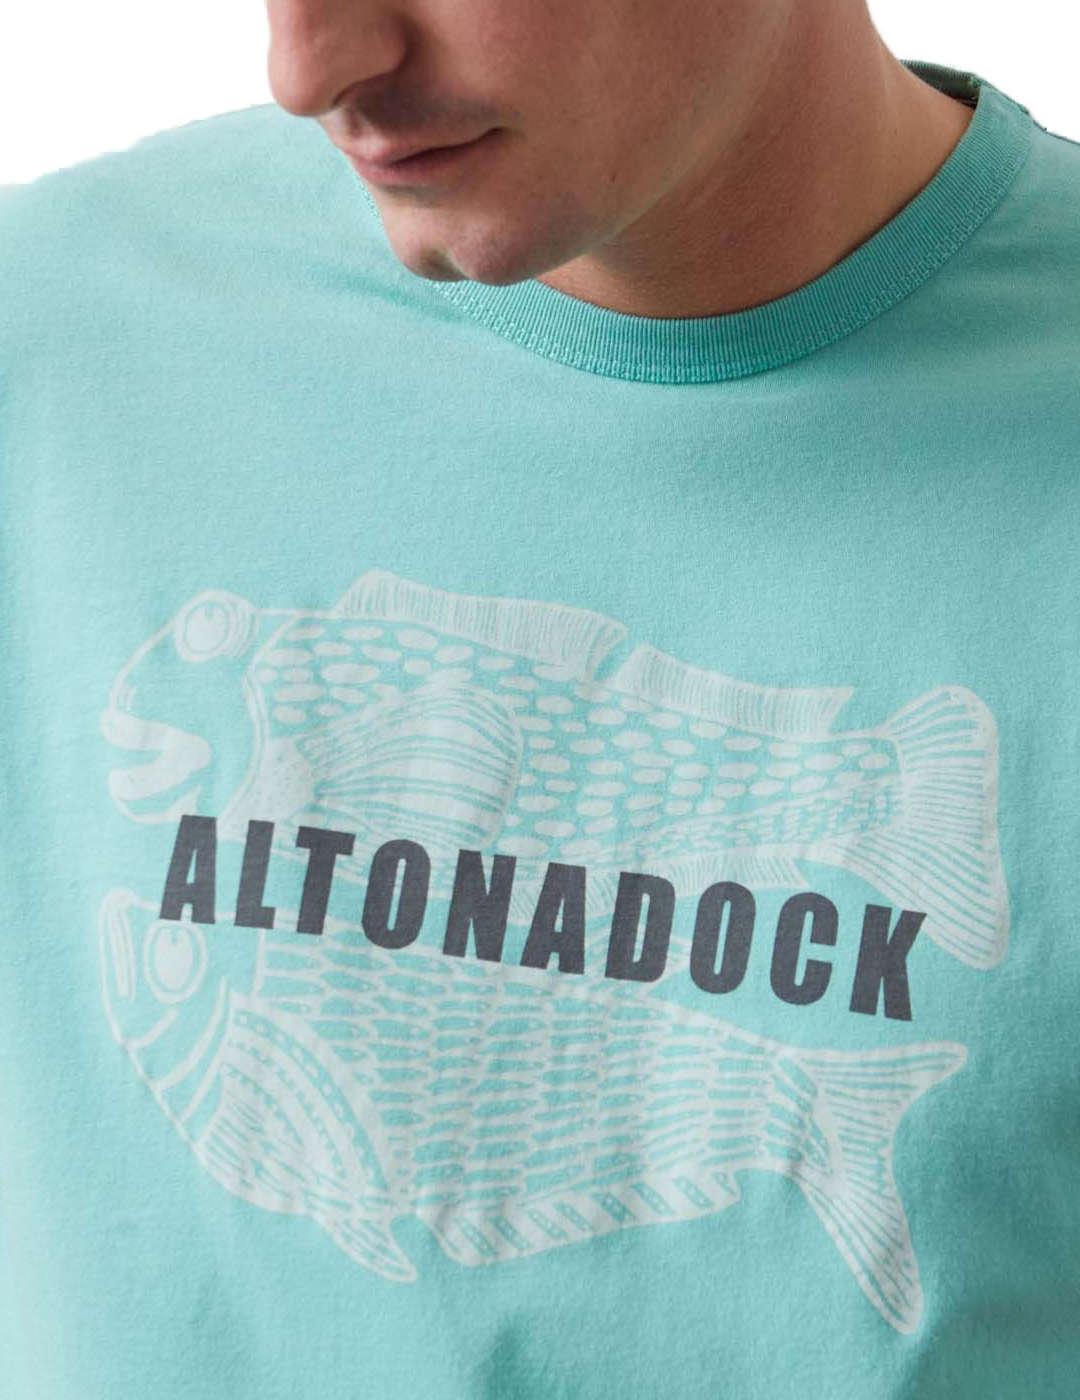 Camiseta Altonadock aguamarina peces manga corta de hombre